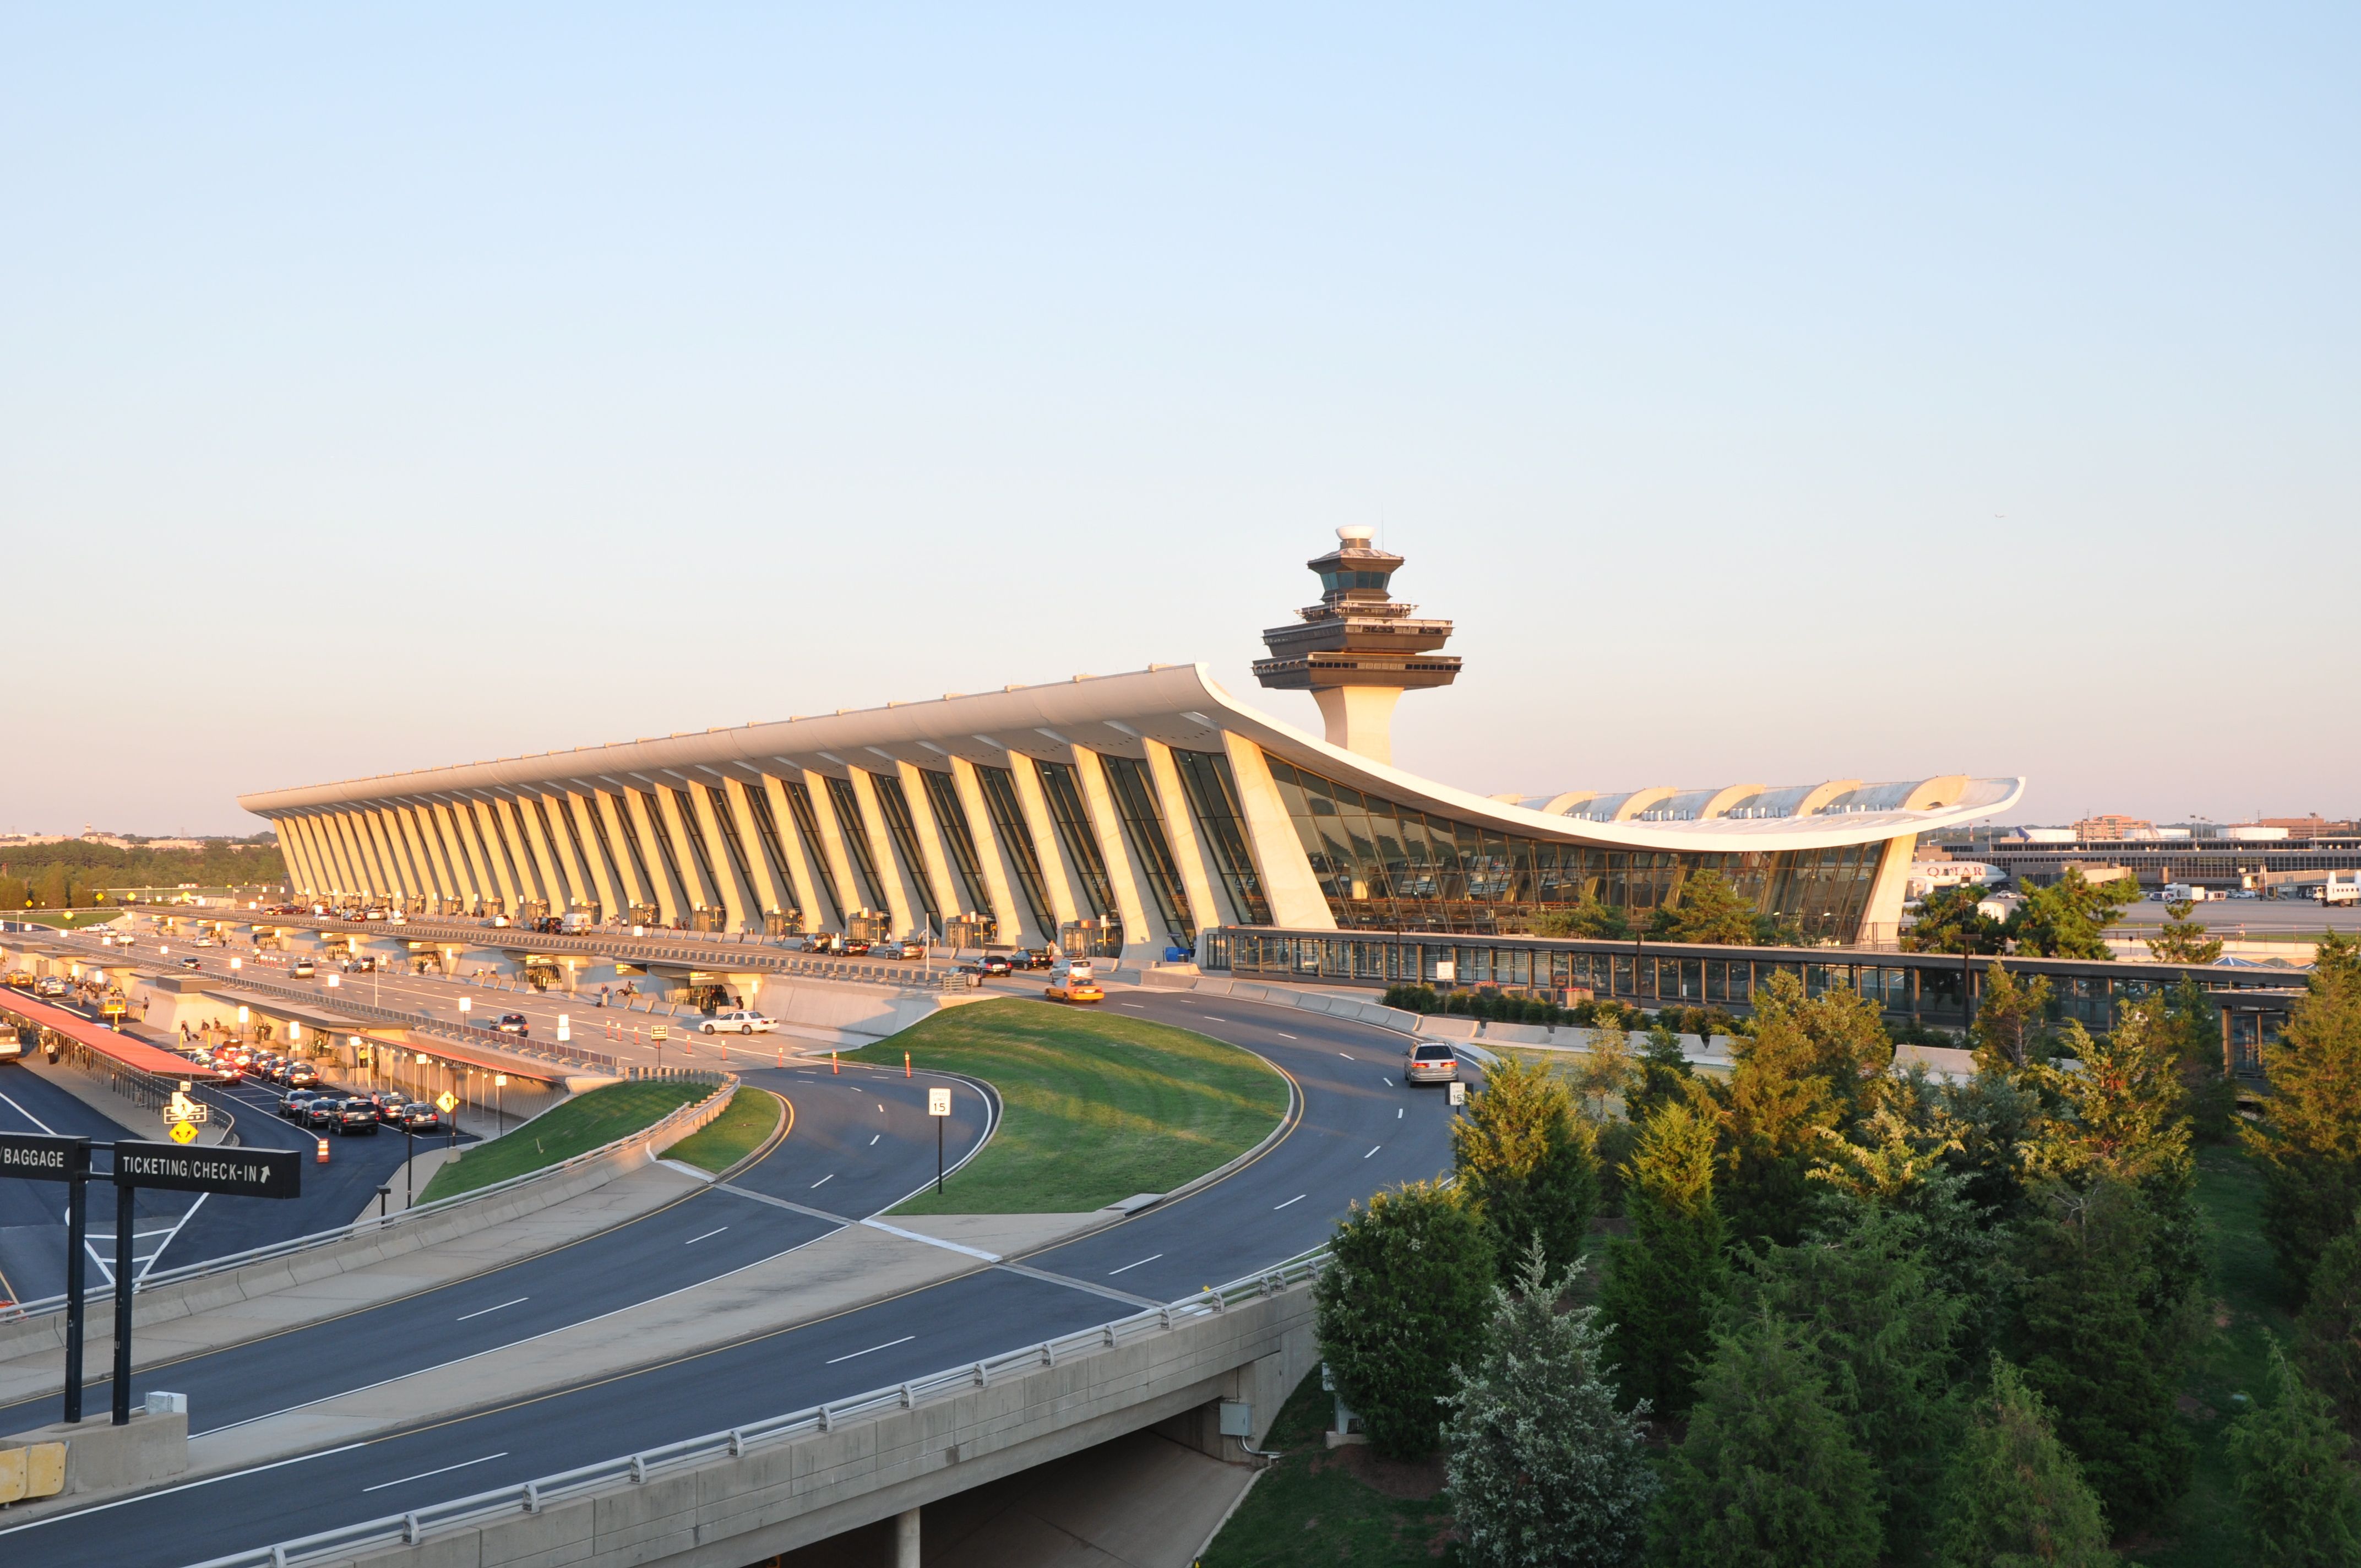 Main Terminal at Washington Dulles International Airport.